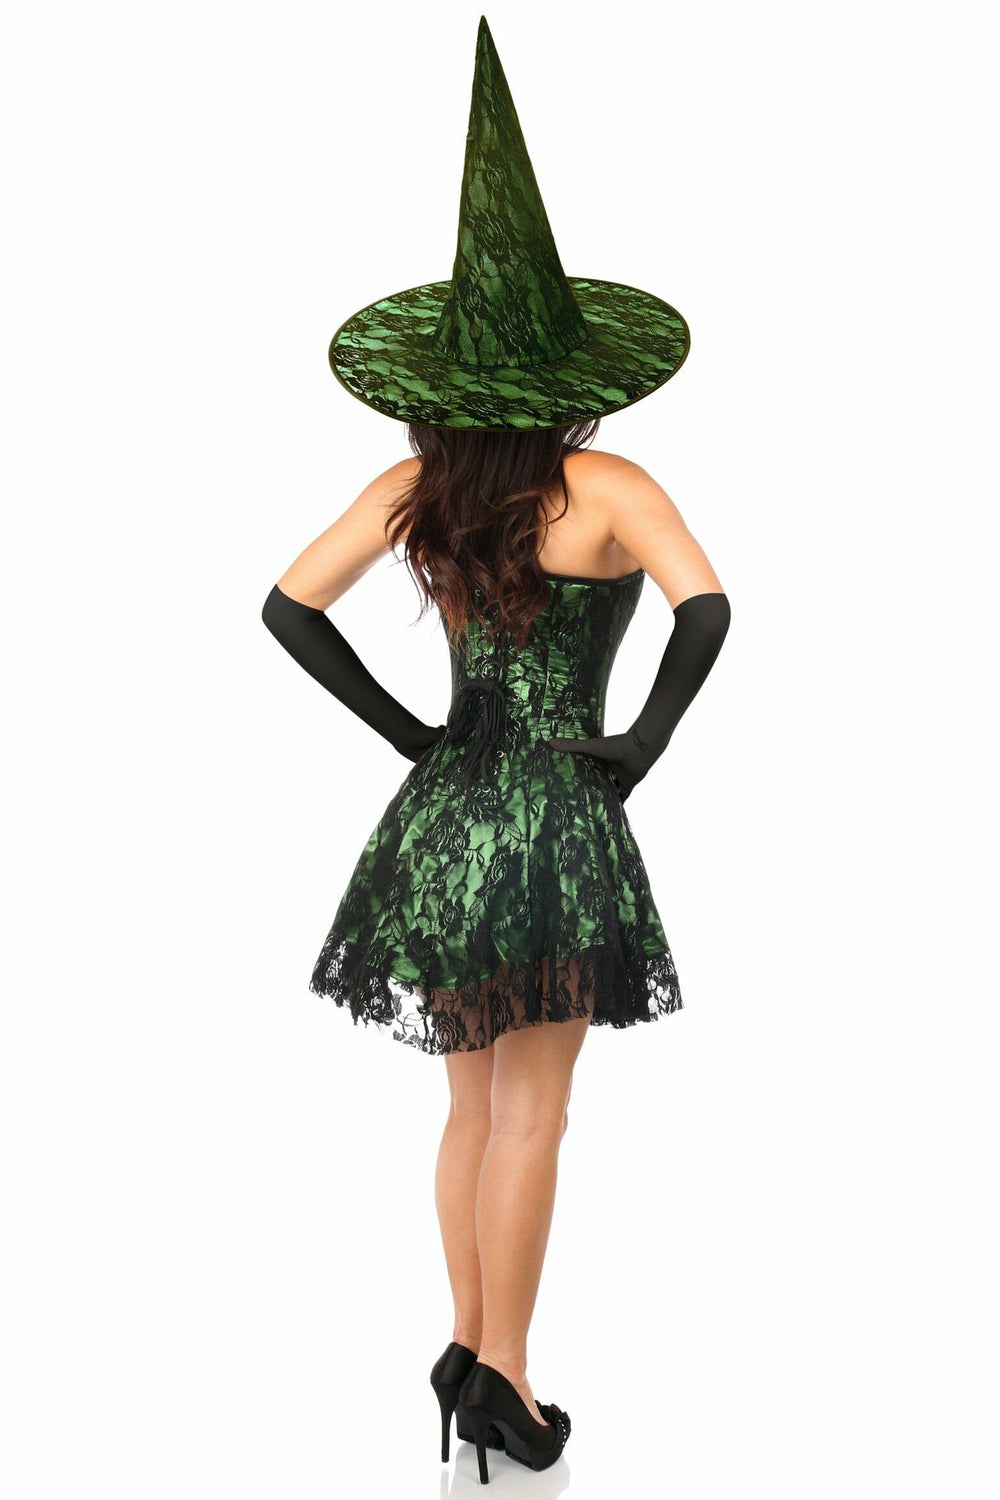 Lavish 3 PC Green Lace Corset Dress Costume-Witch Costumes-Daisy Corsets-SEXYSHOES.COM